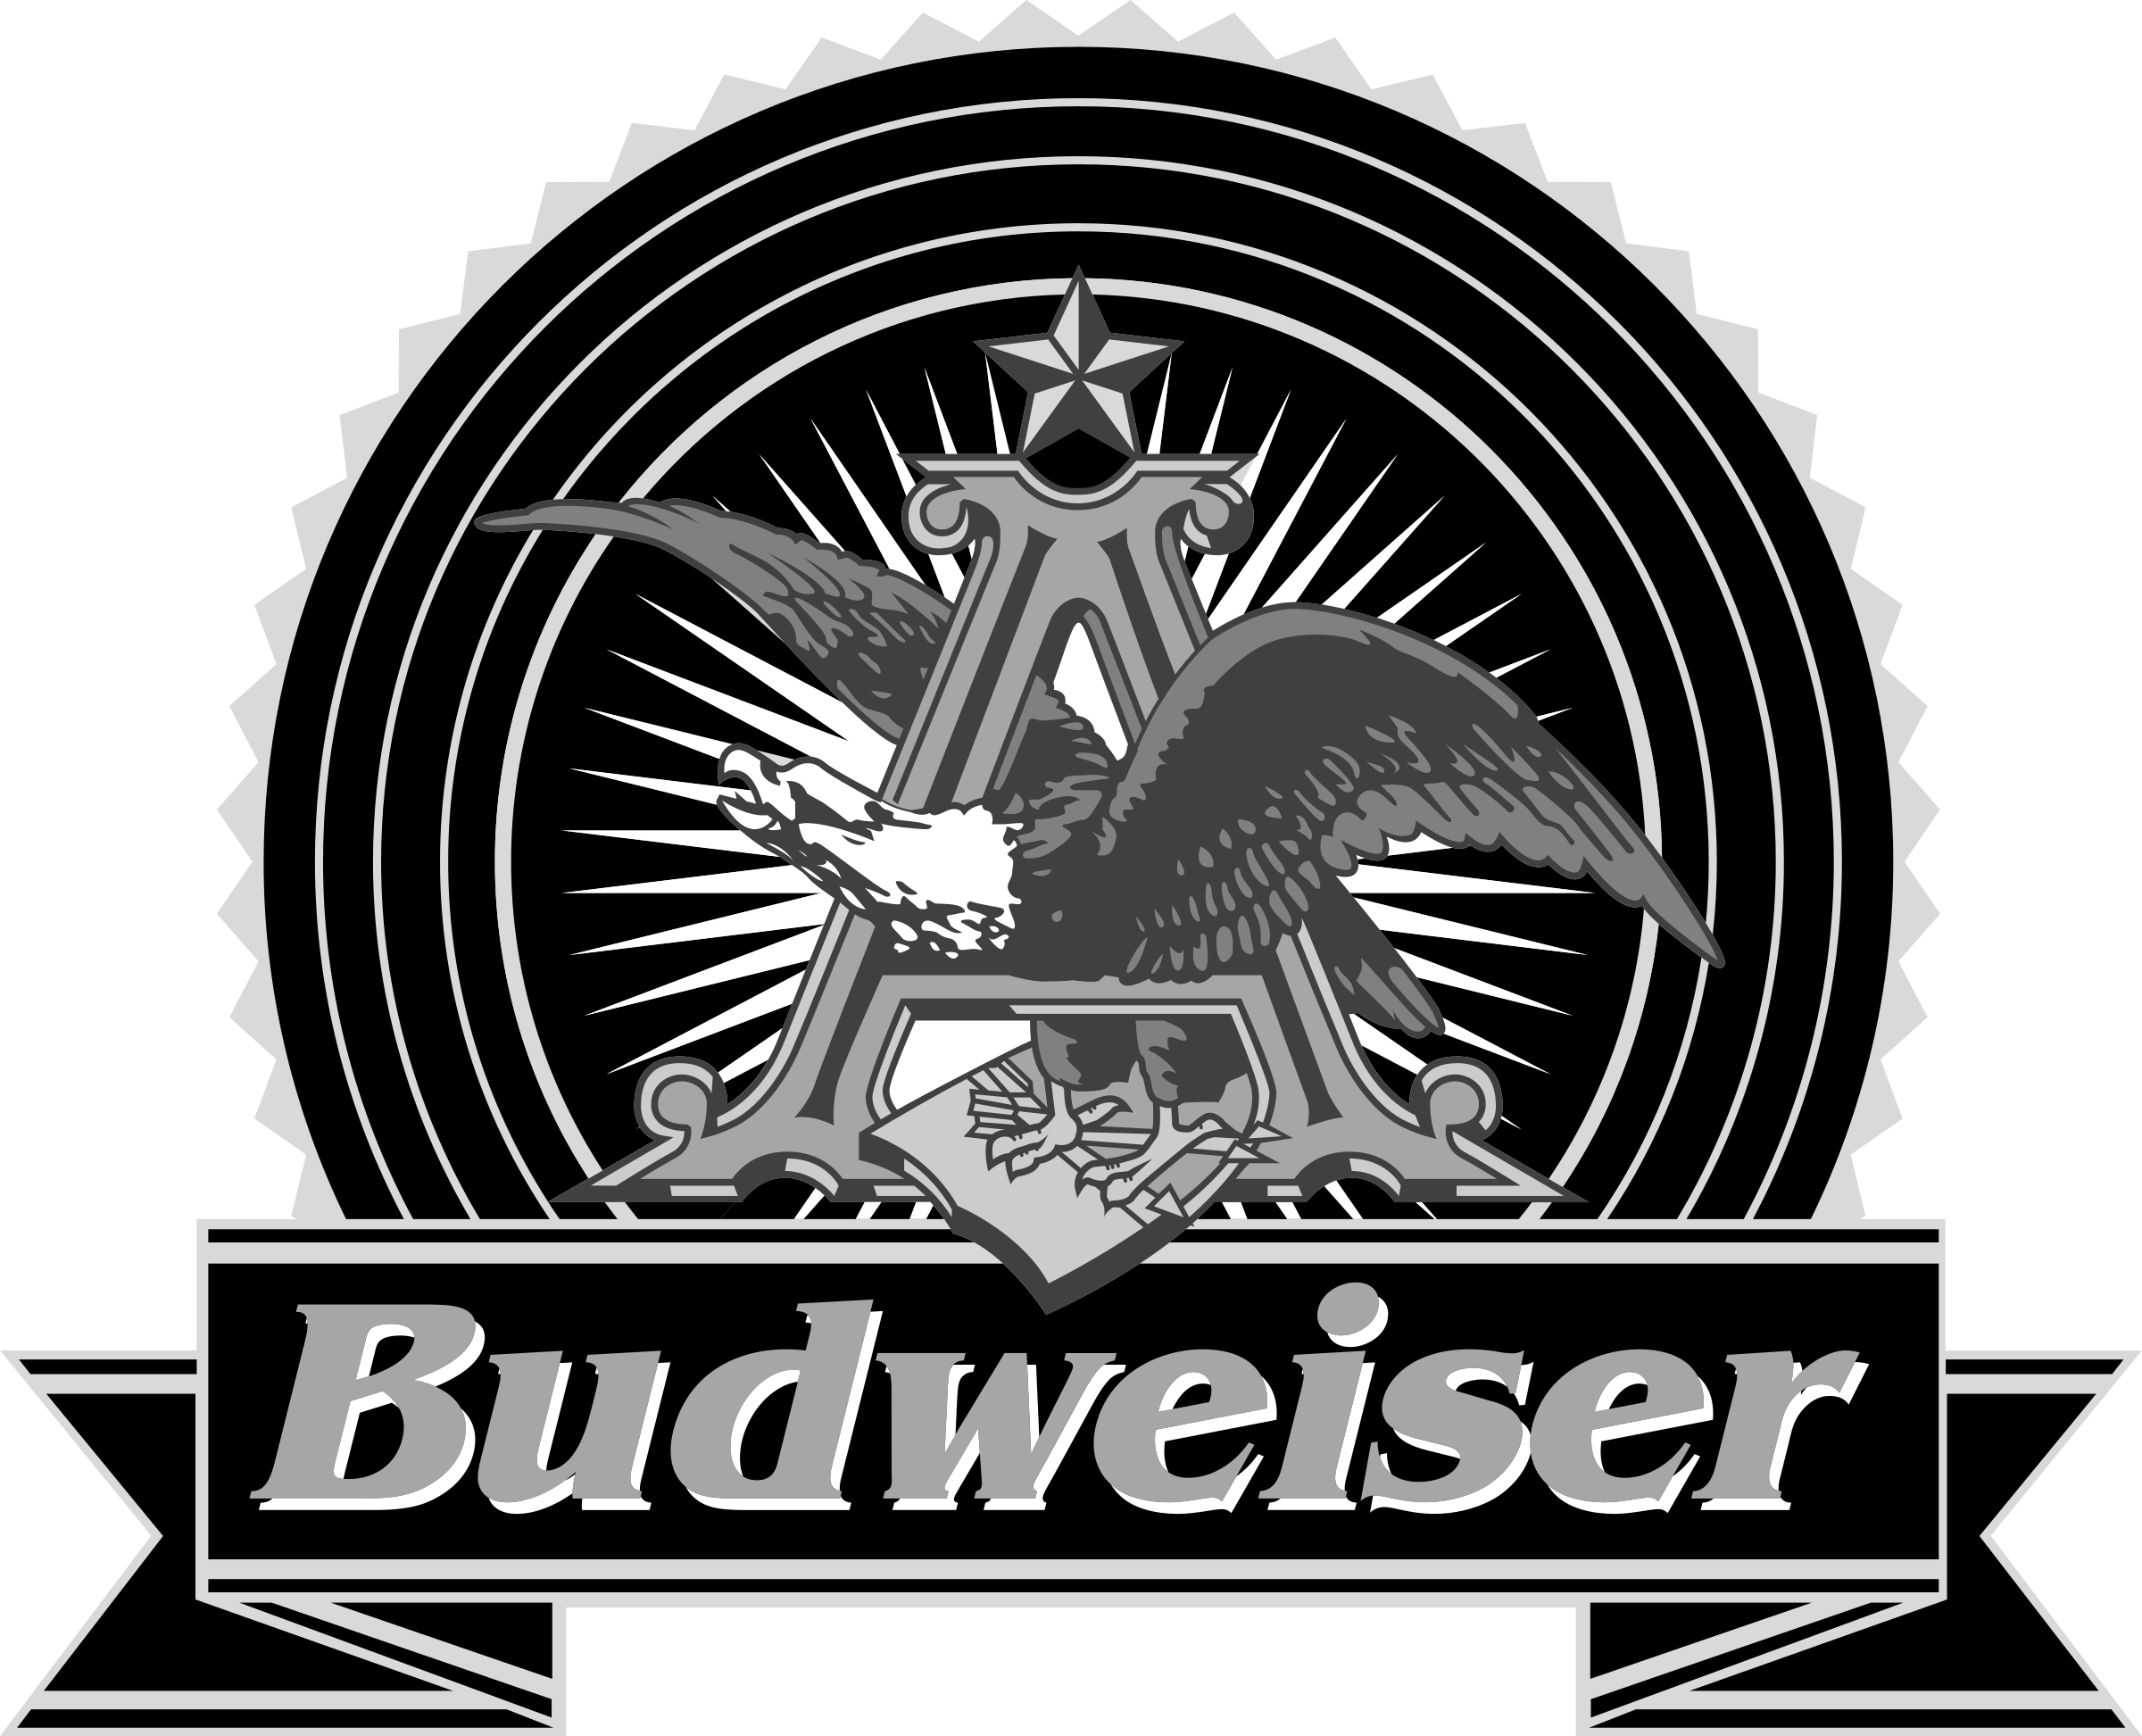 Budweiser Eagle Logo - Budweiser Eagle Logo PNG Transparent & SVG Vector - Freebie Supply